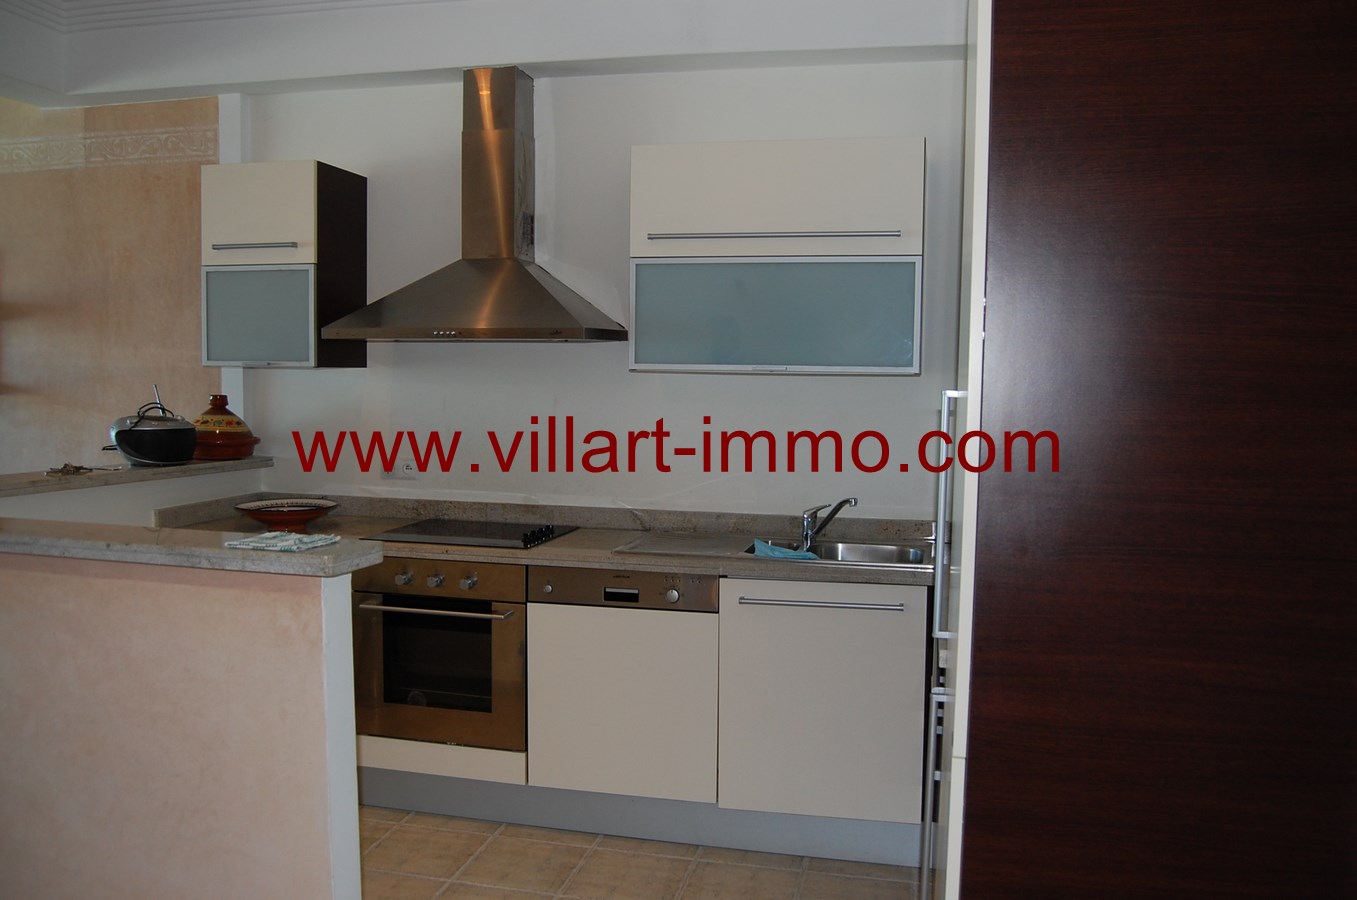 7-Vente-Appartement-Assilah-Centre-Ville-Salle-De-Bain 2-VA117-Villart Immo